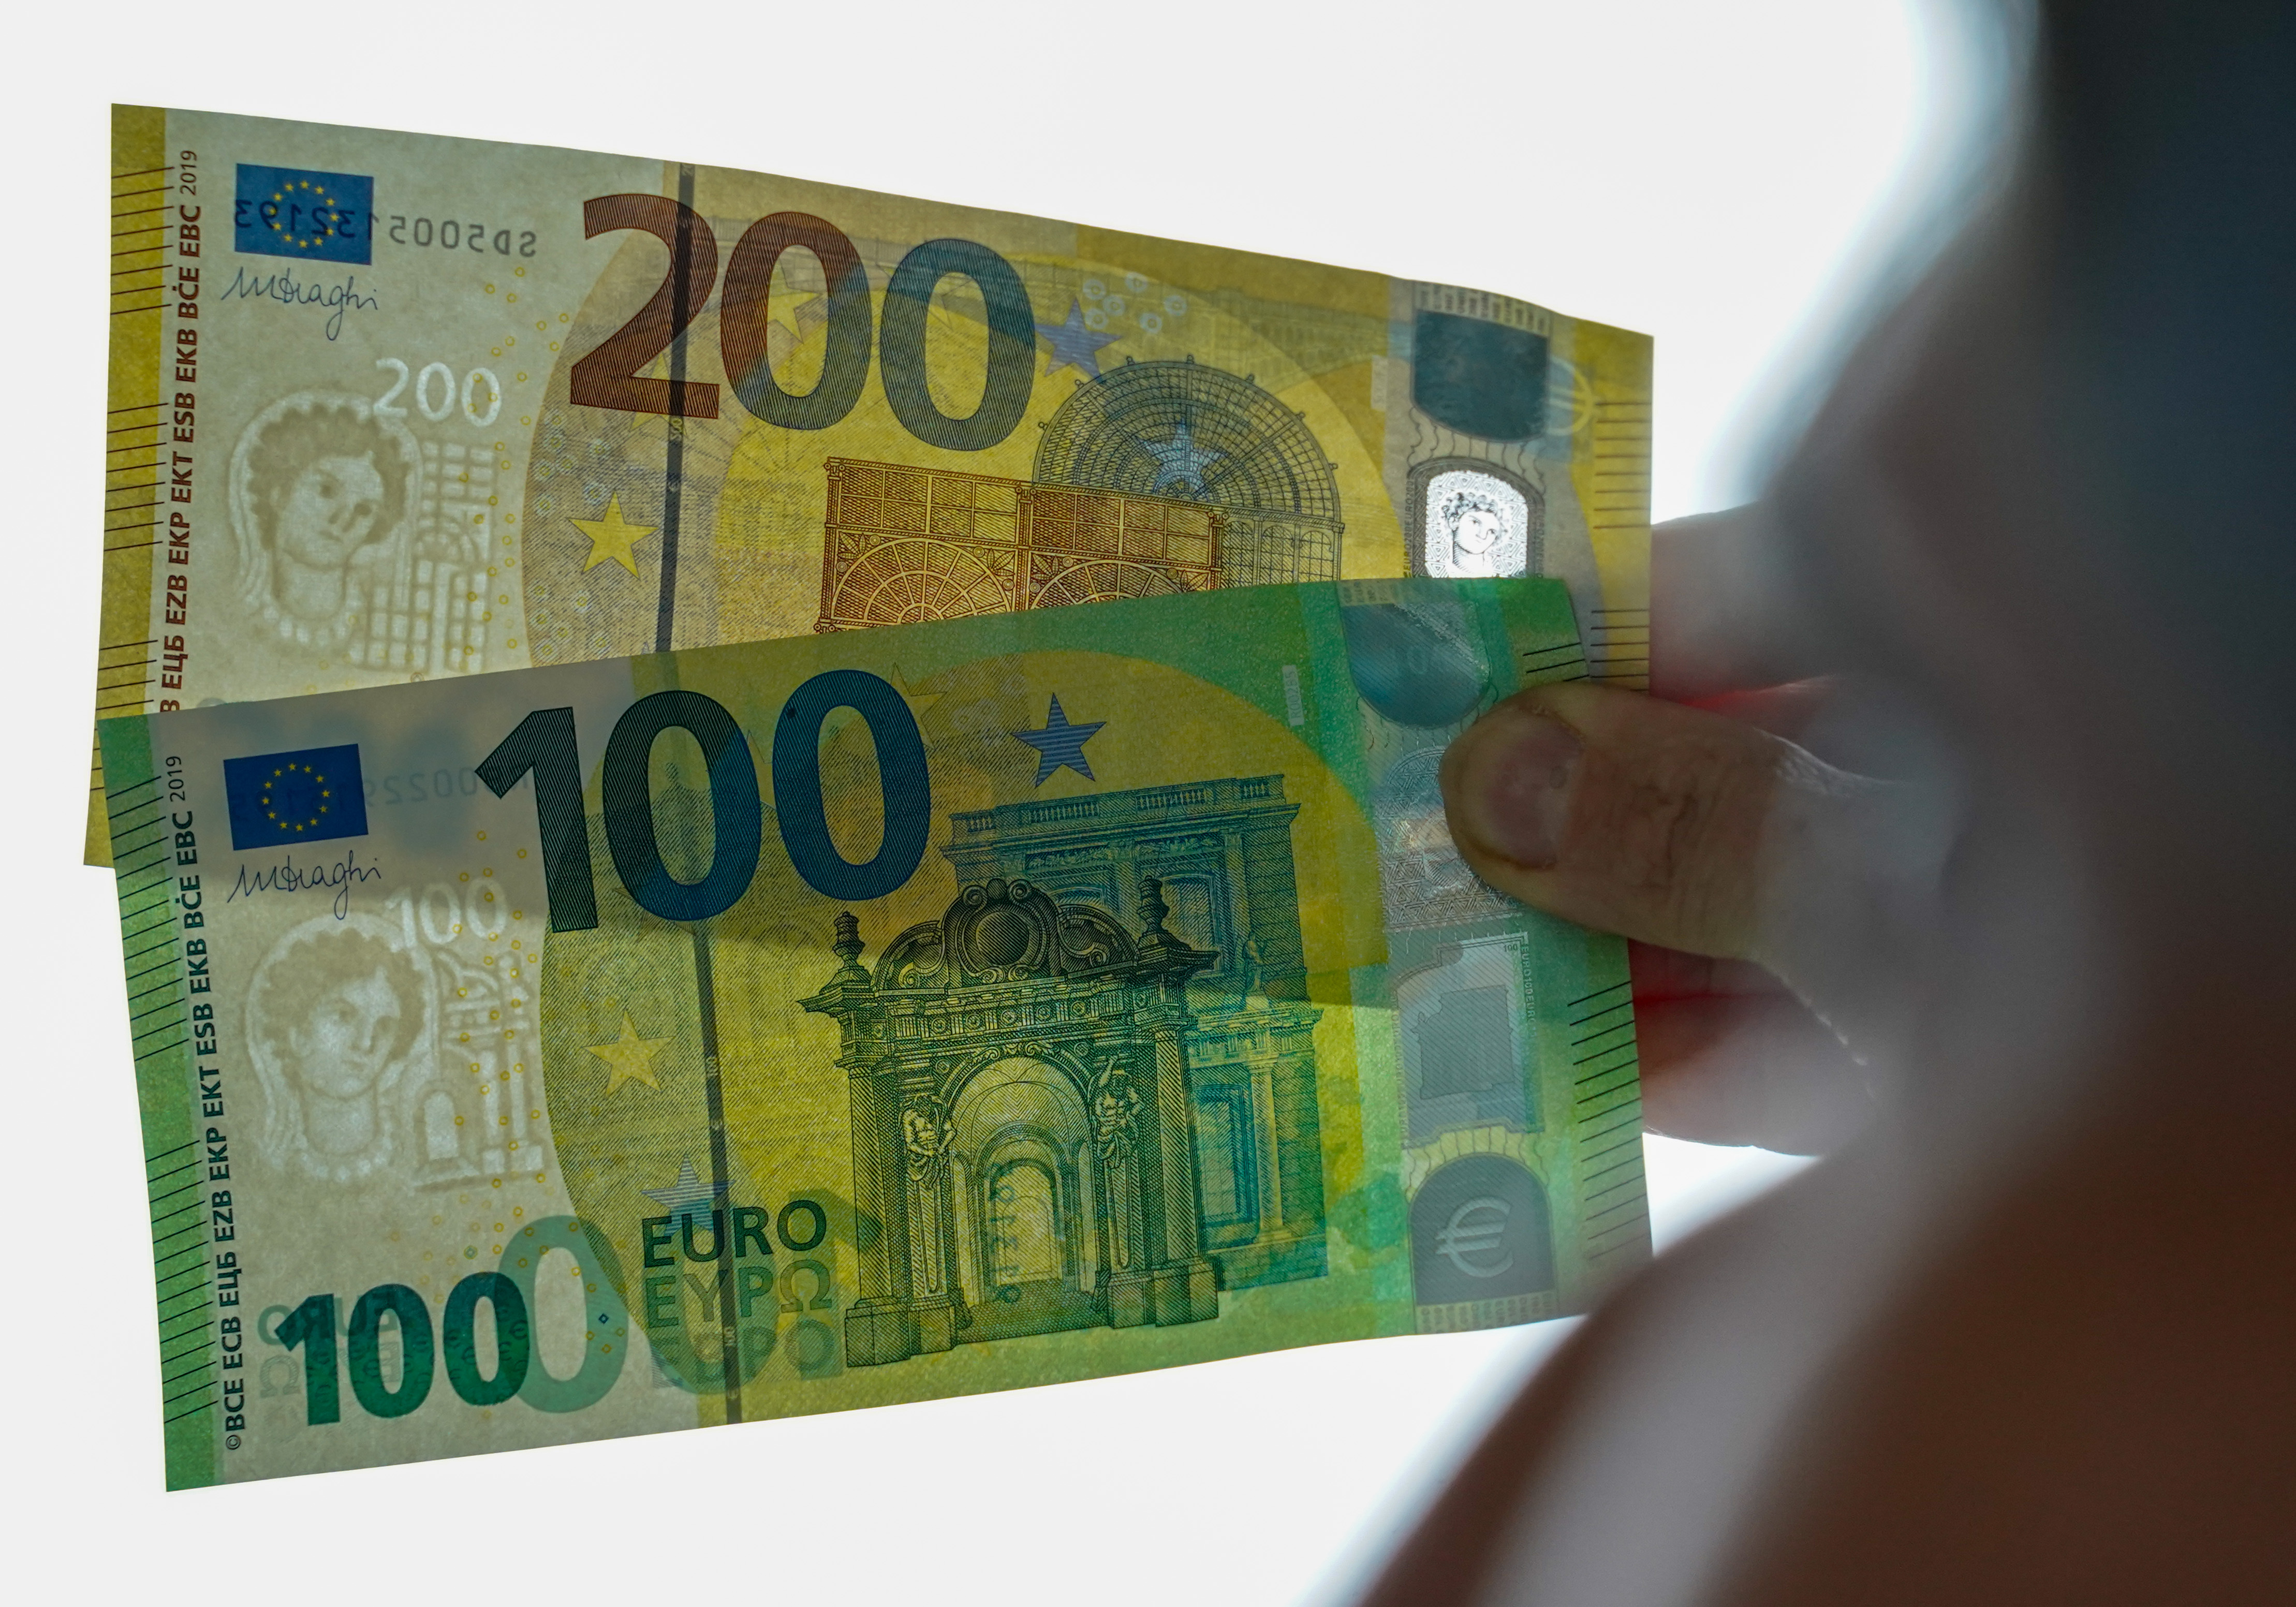 Евро старые купюры. Евро банкноты номинал 200. Купюра 200 евро. Банкноты 100 евро. Новая купюра 100 евро.